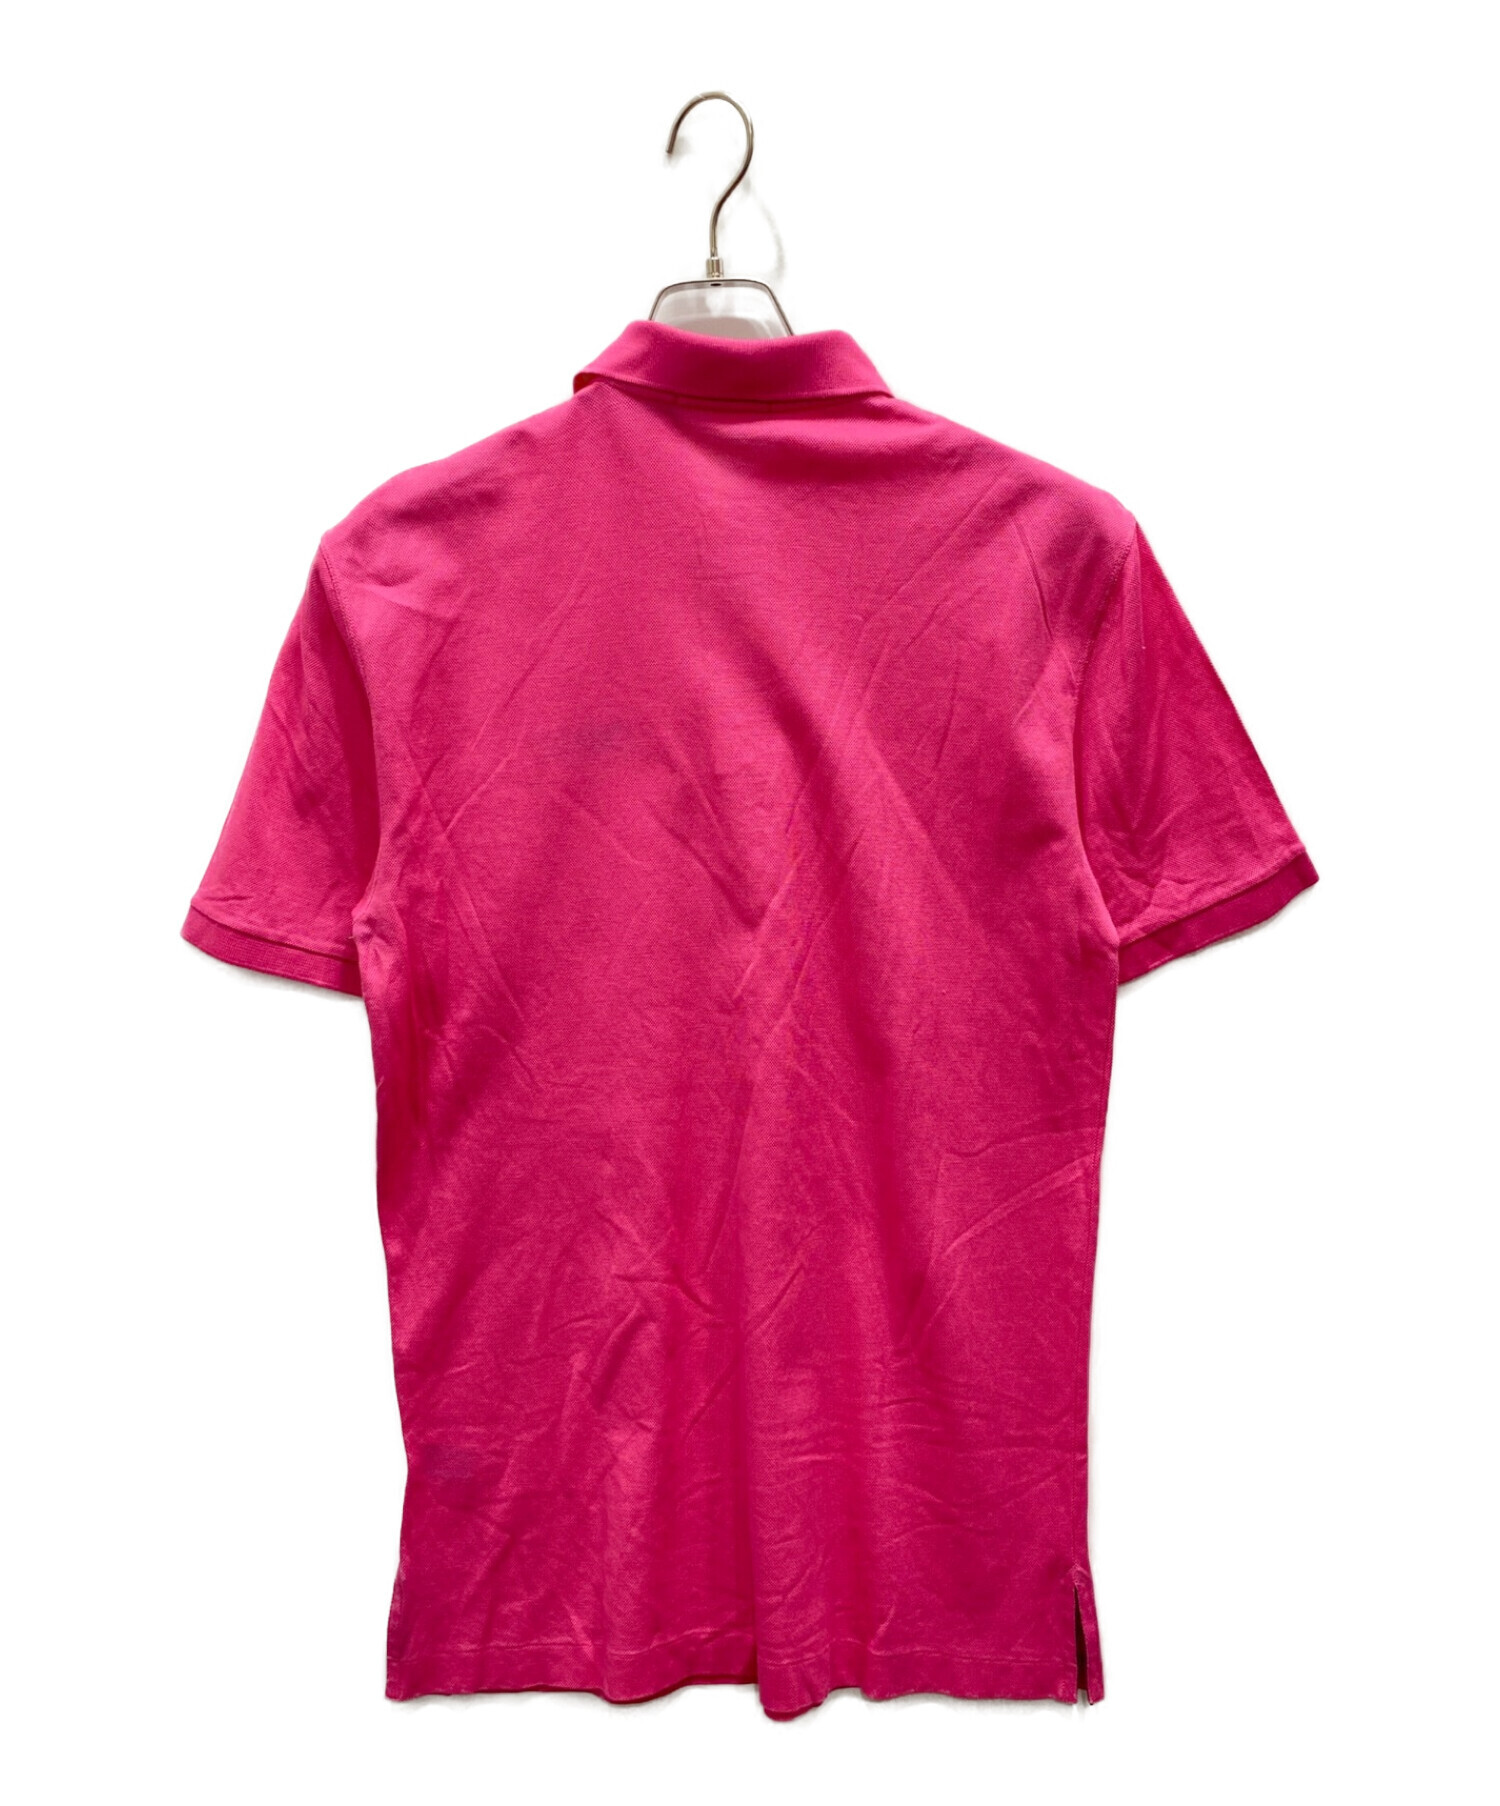 RALPH LAUREN PurpleLabel (ラルフローレン パープルレーベル) 半袖ポロシャツ ピンク サイズ:M